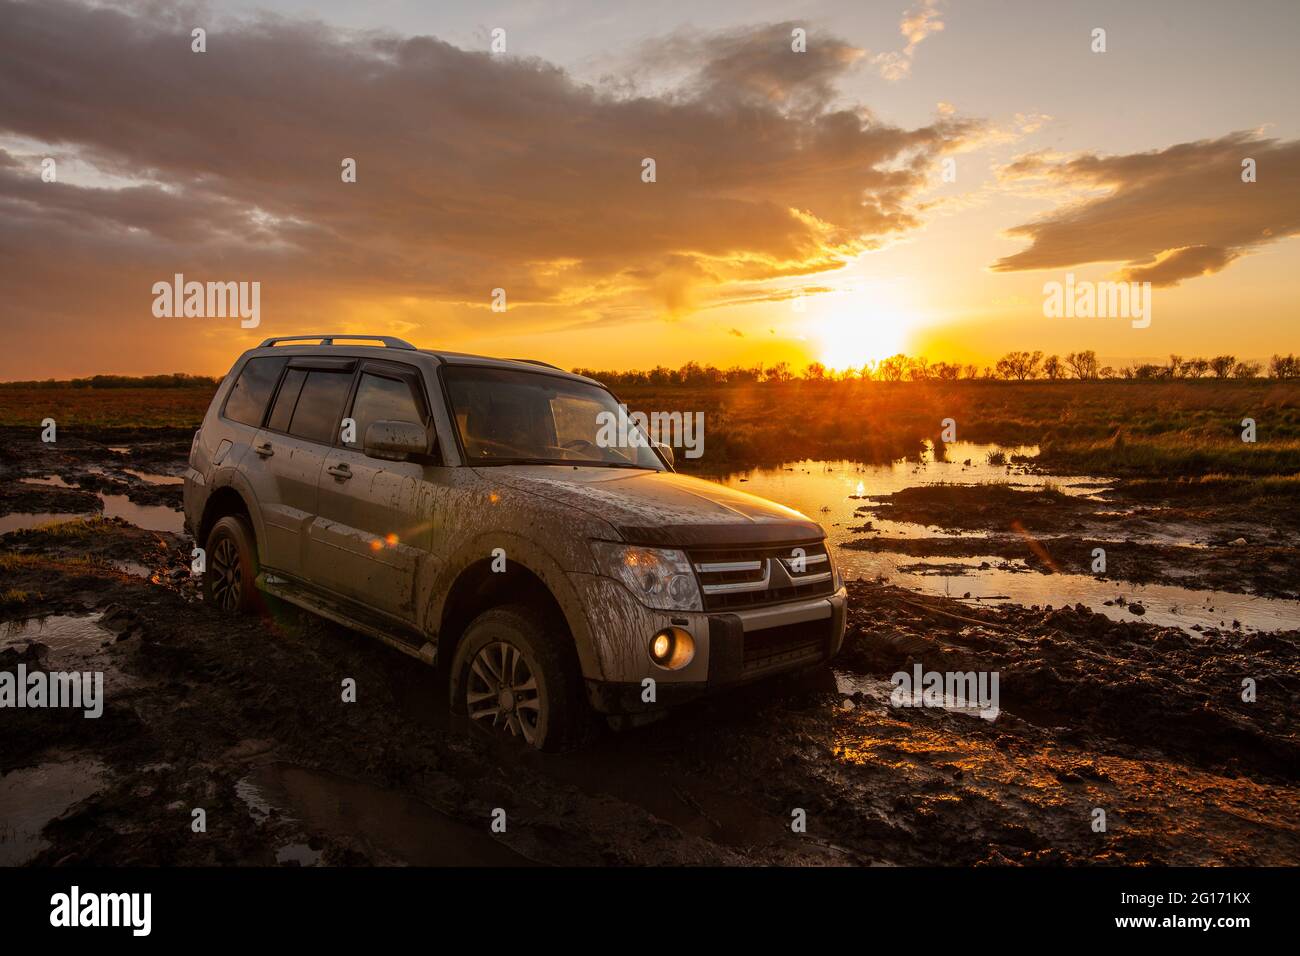 Mitsubishi Pajero/Montero stuck in mud in the evening Stock Photo